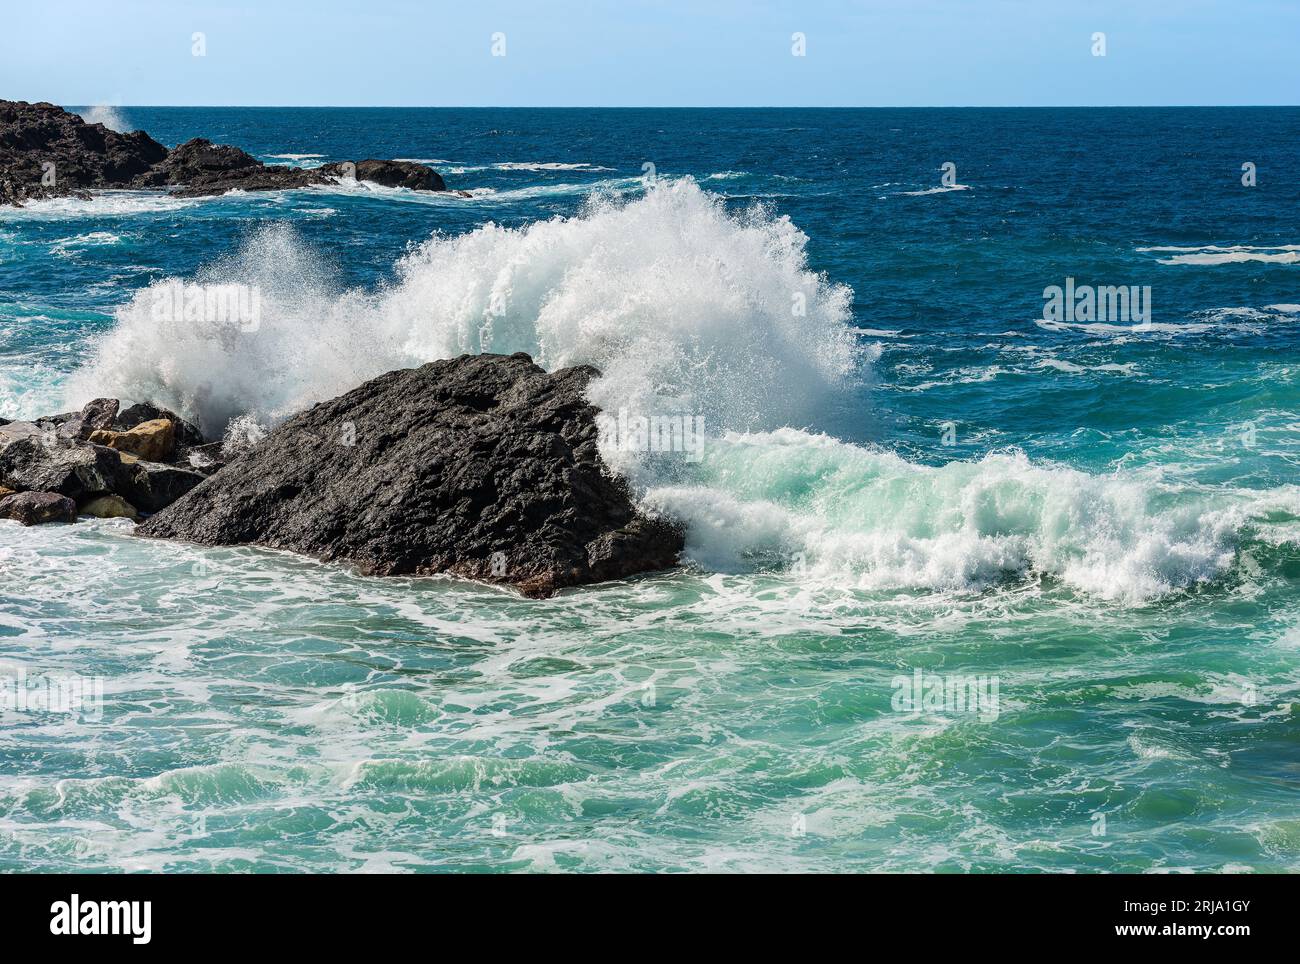 Large white waves of the sea break on the rocks. Mediterranean Sea near the small Village of Framura. La Spezia, Liguria, Italy, Europe. Stock Photo